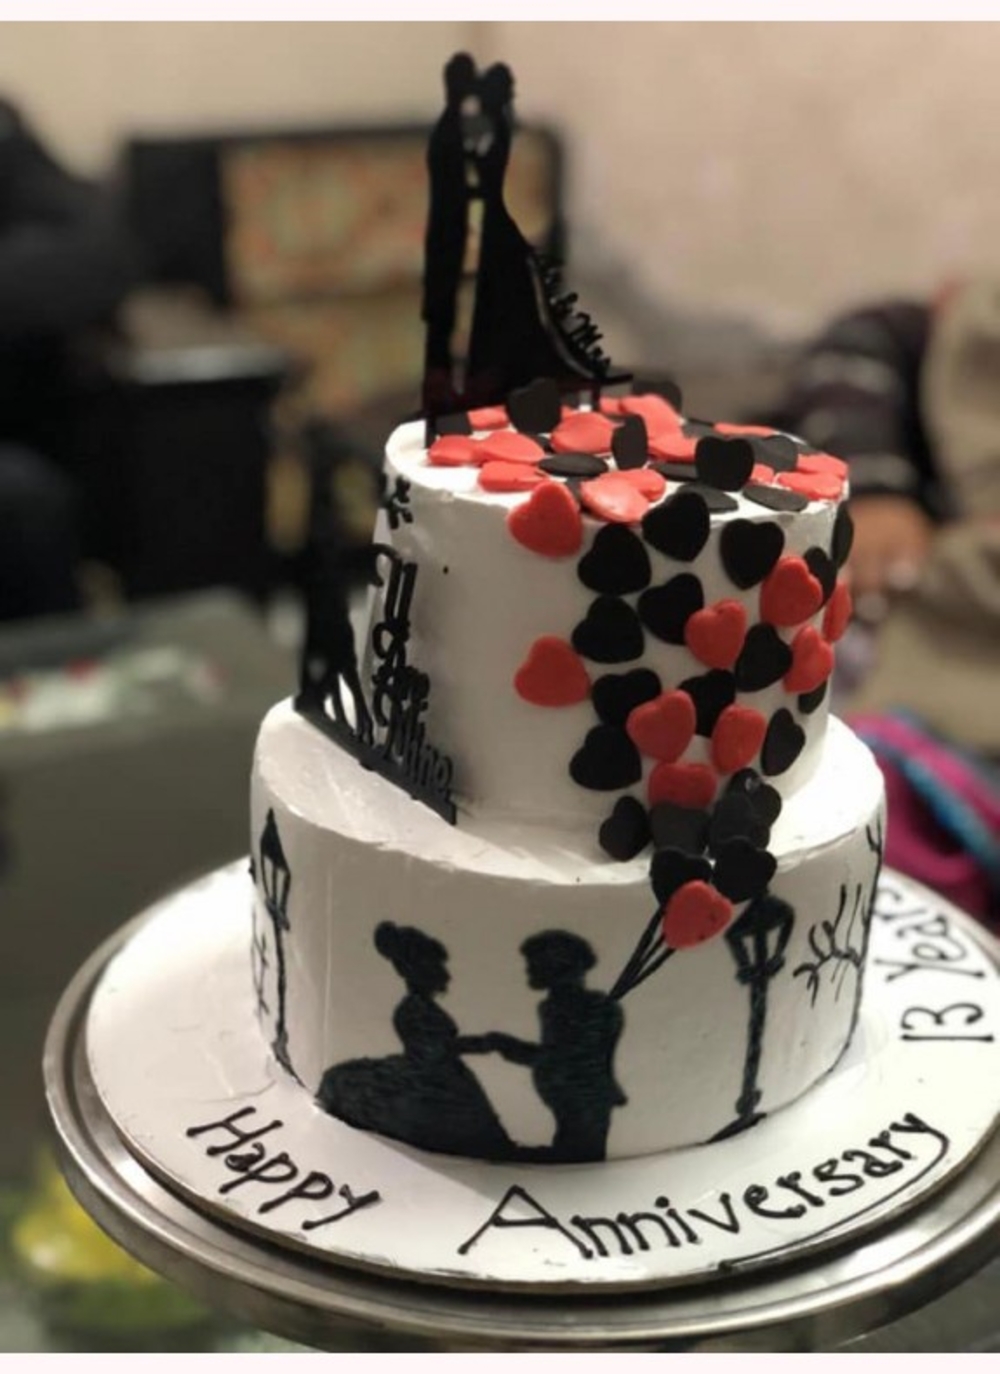 Lucknow Cake and Flowers - Wedding Cake - Indira Nagar - Weddingwire.in